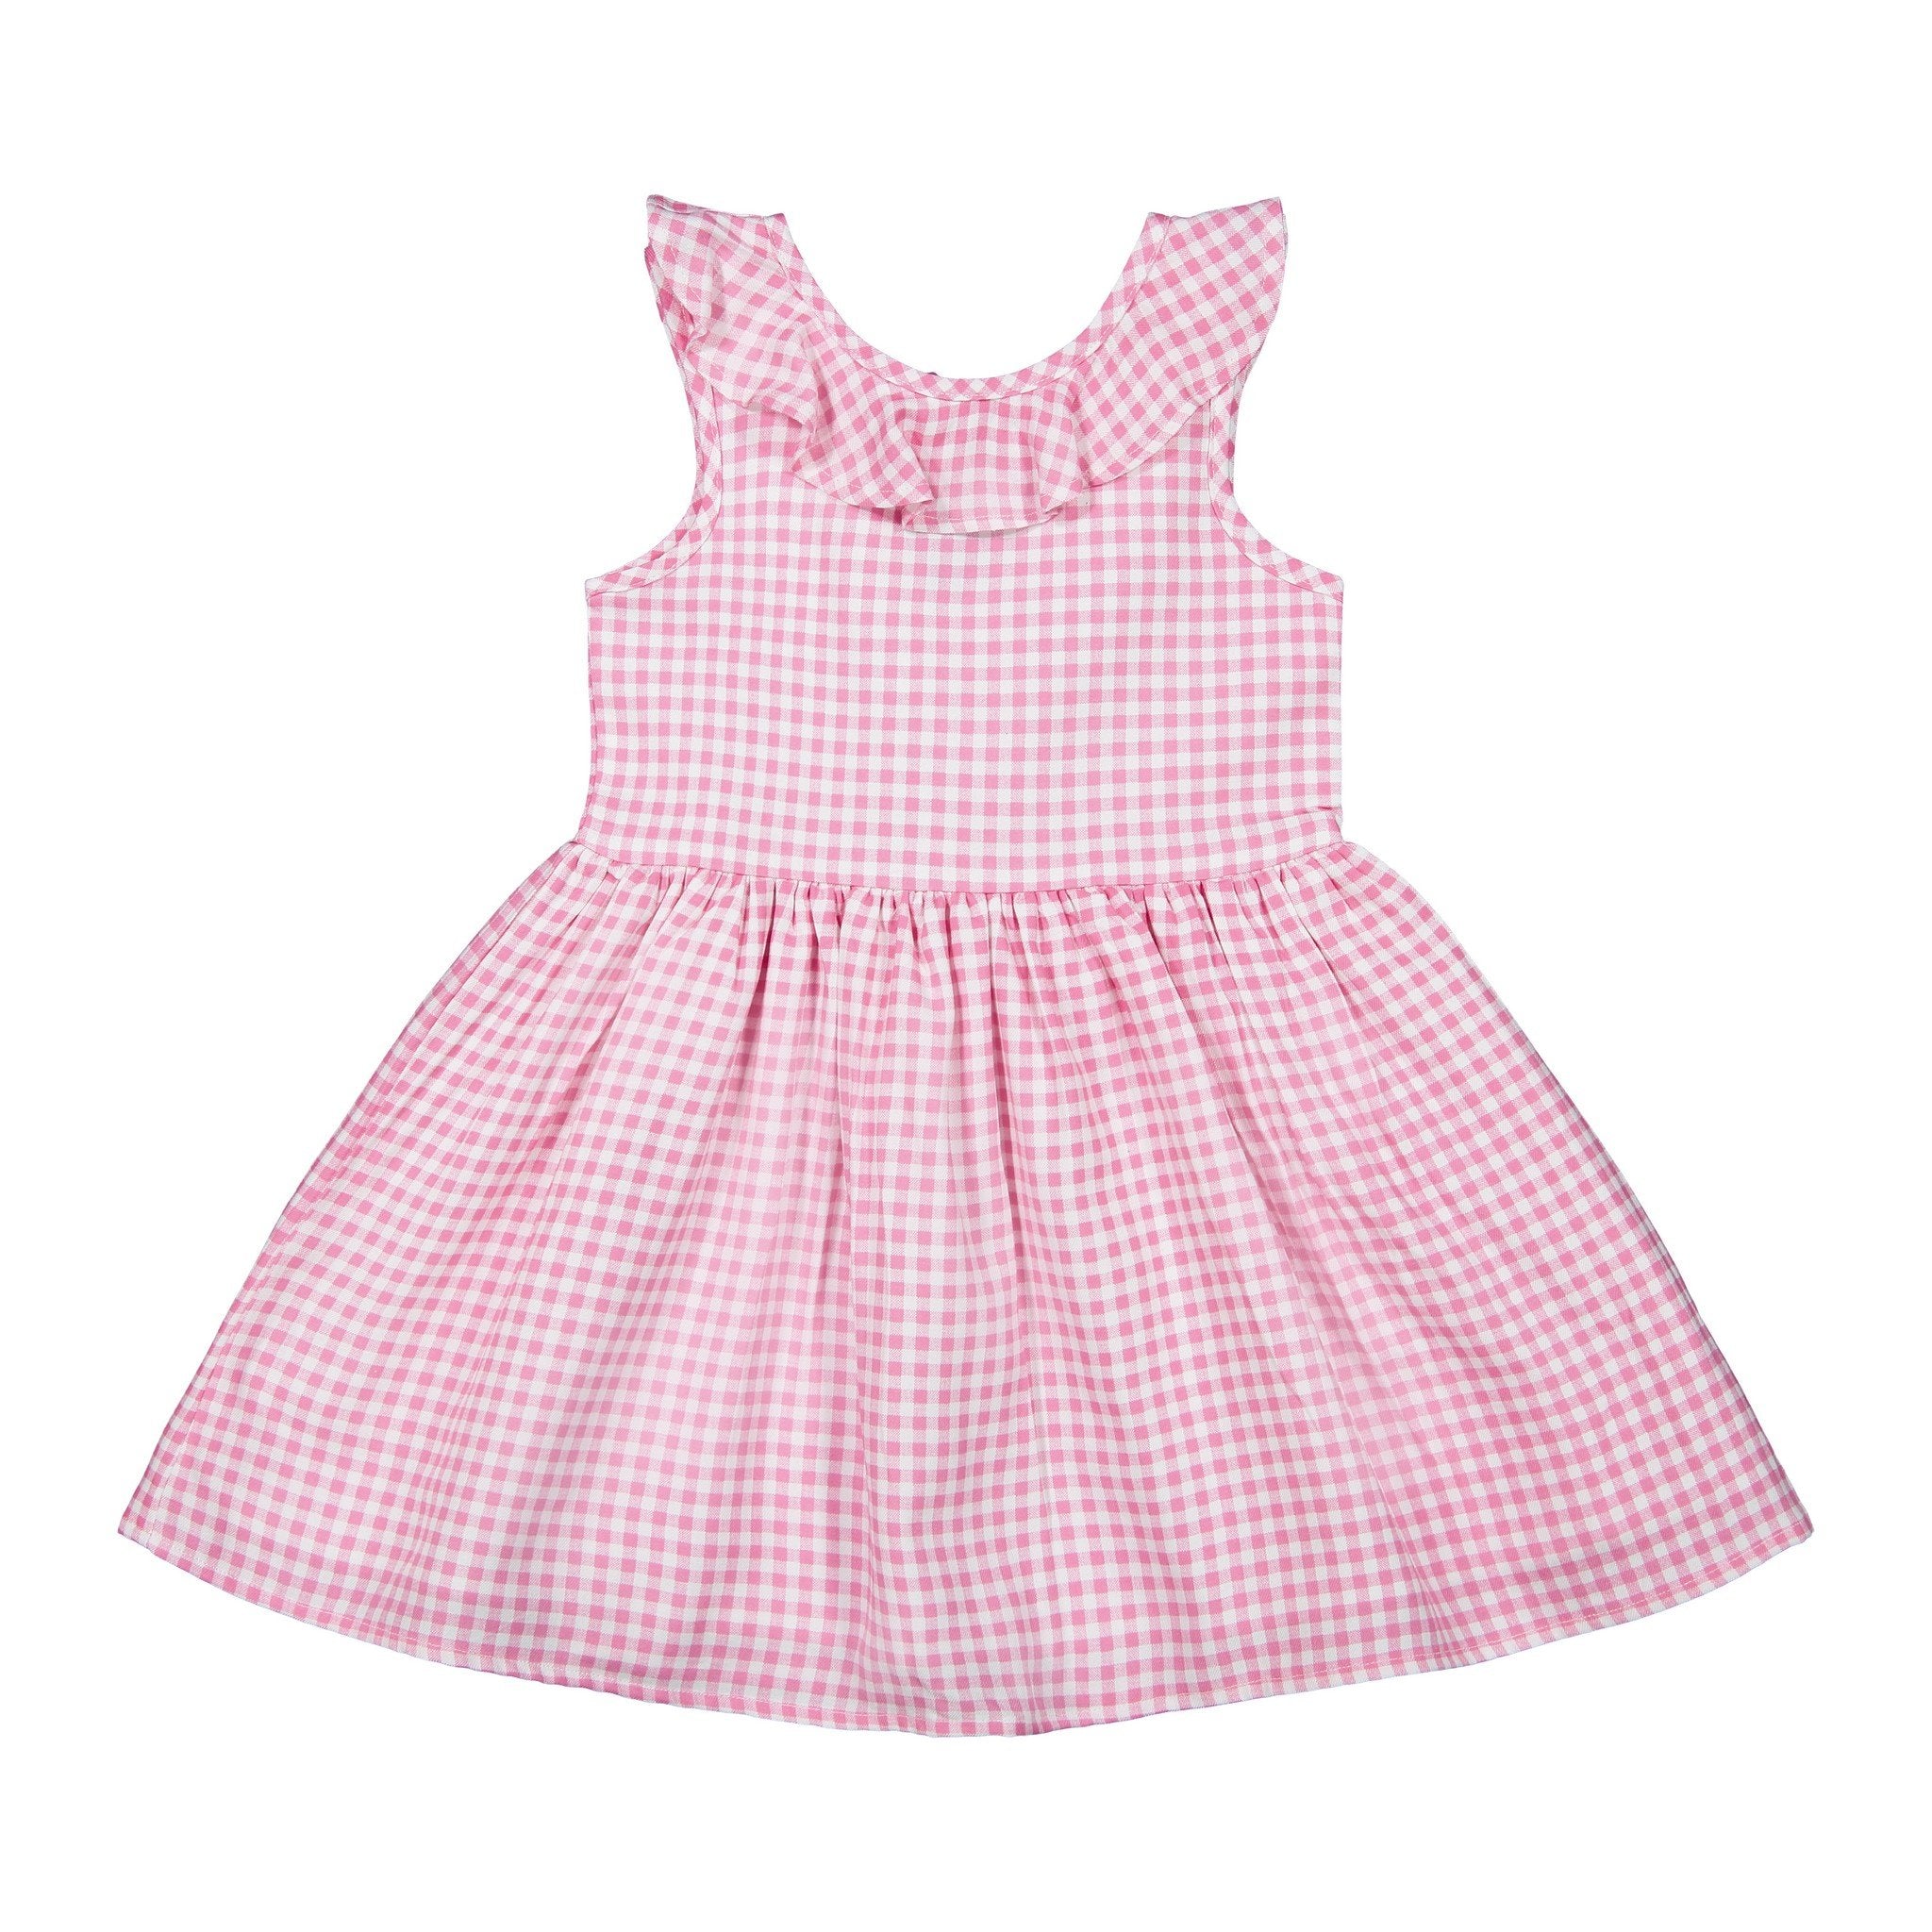 pink gingham dress baby